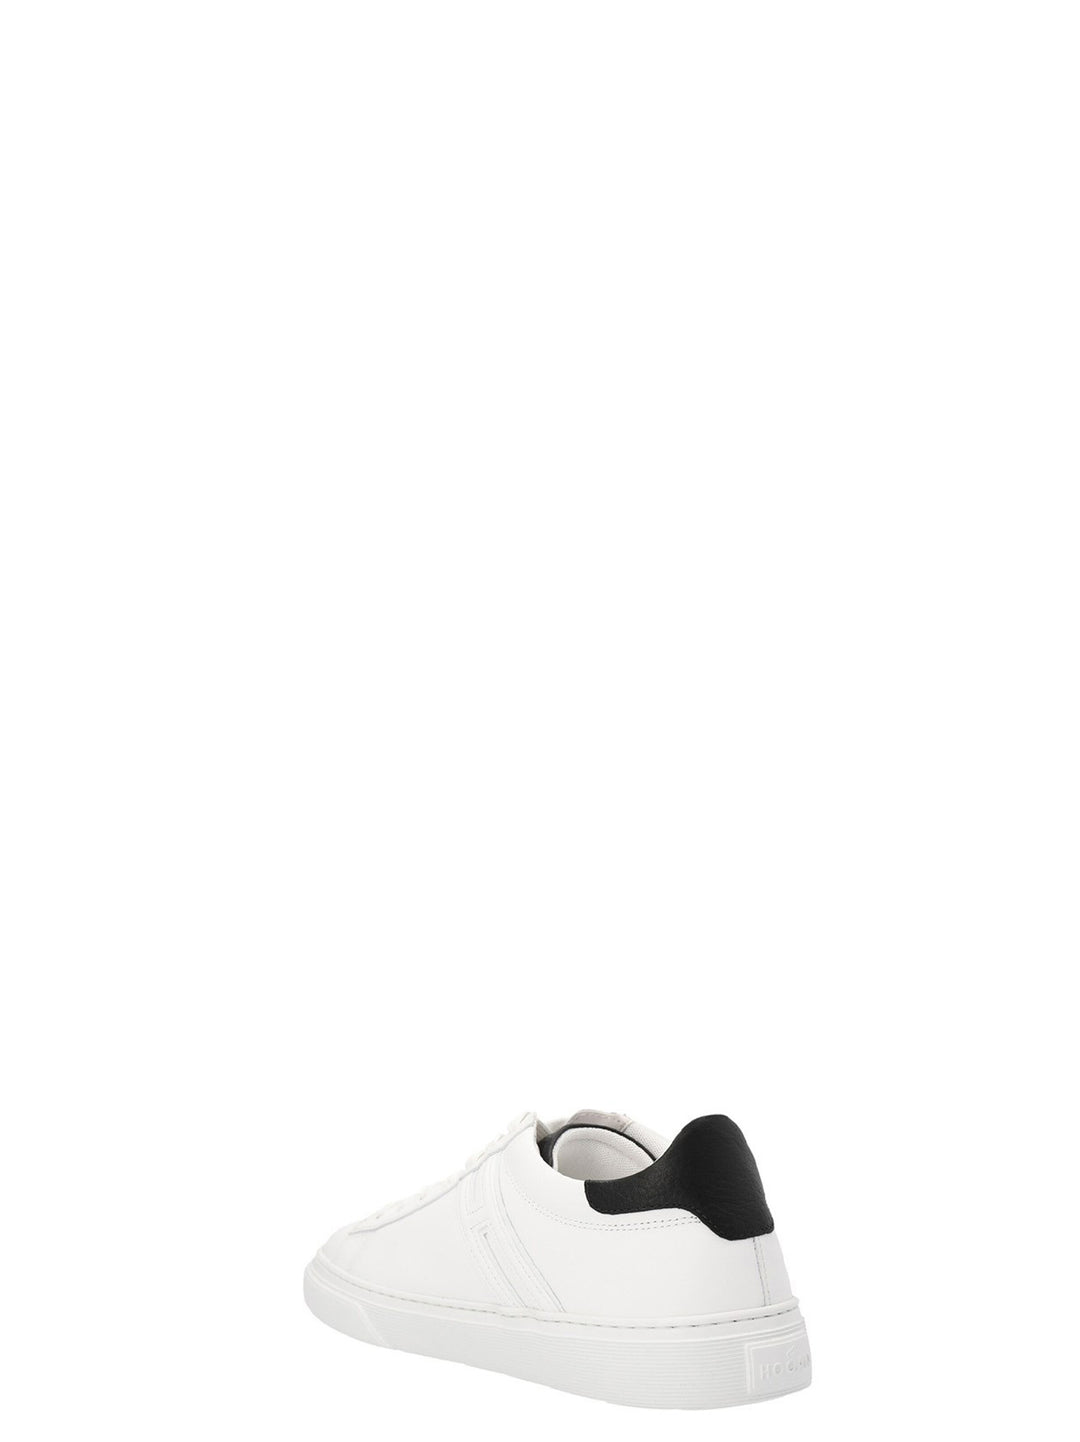 'Canaletto’ Sneakers Bianco/nero